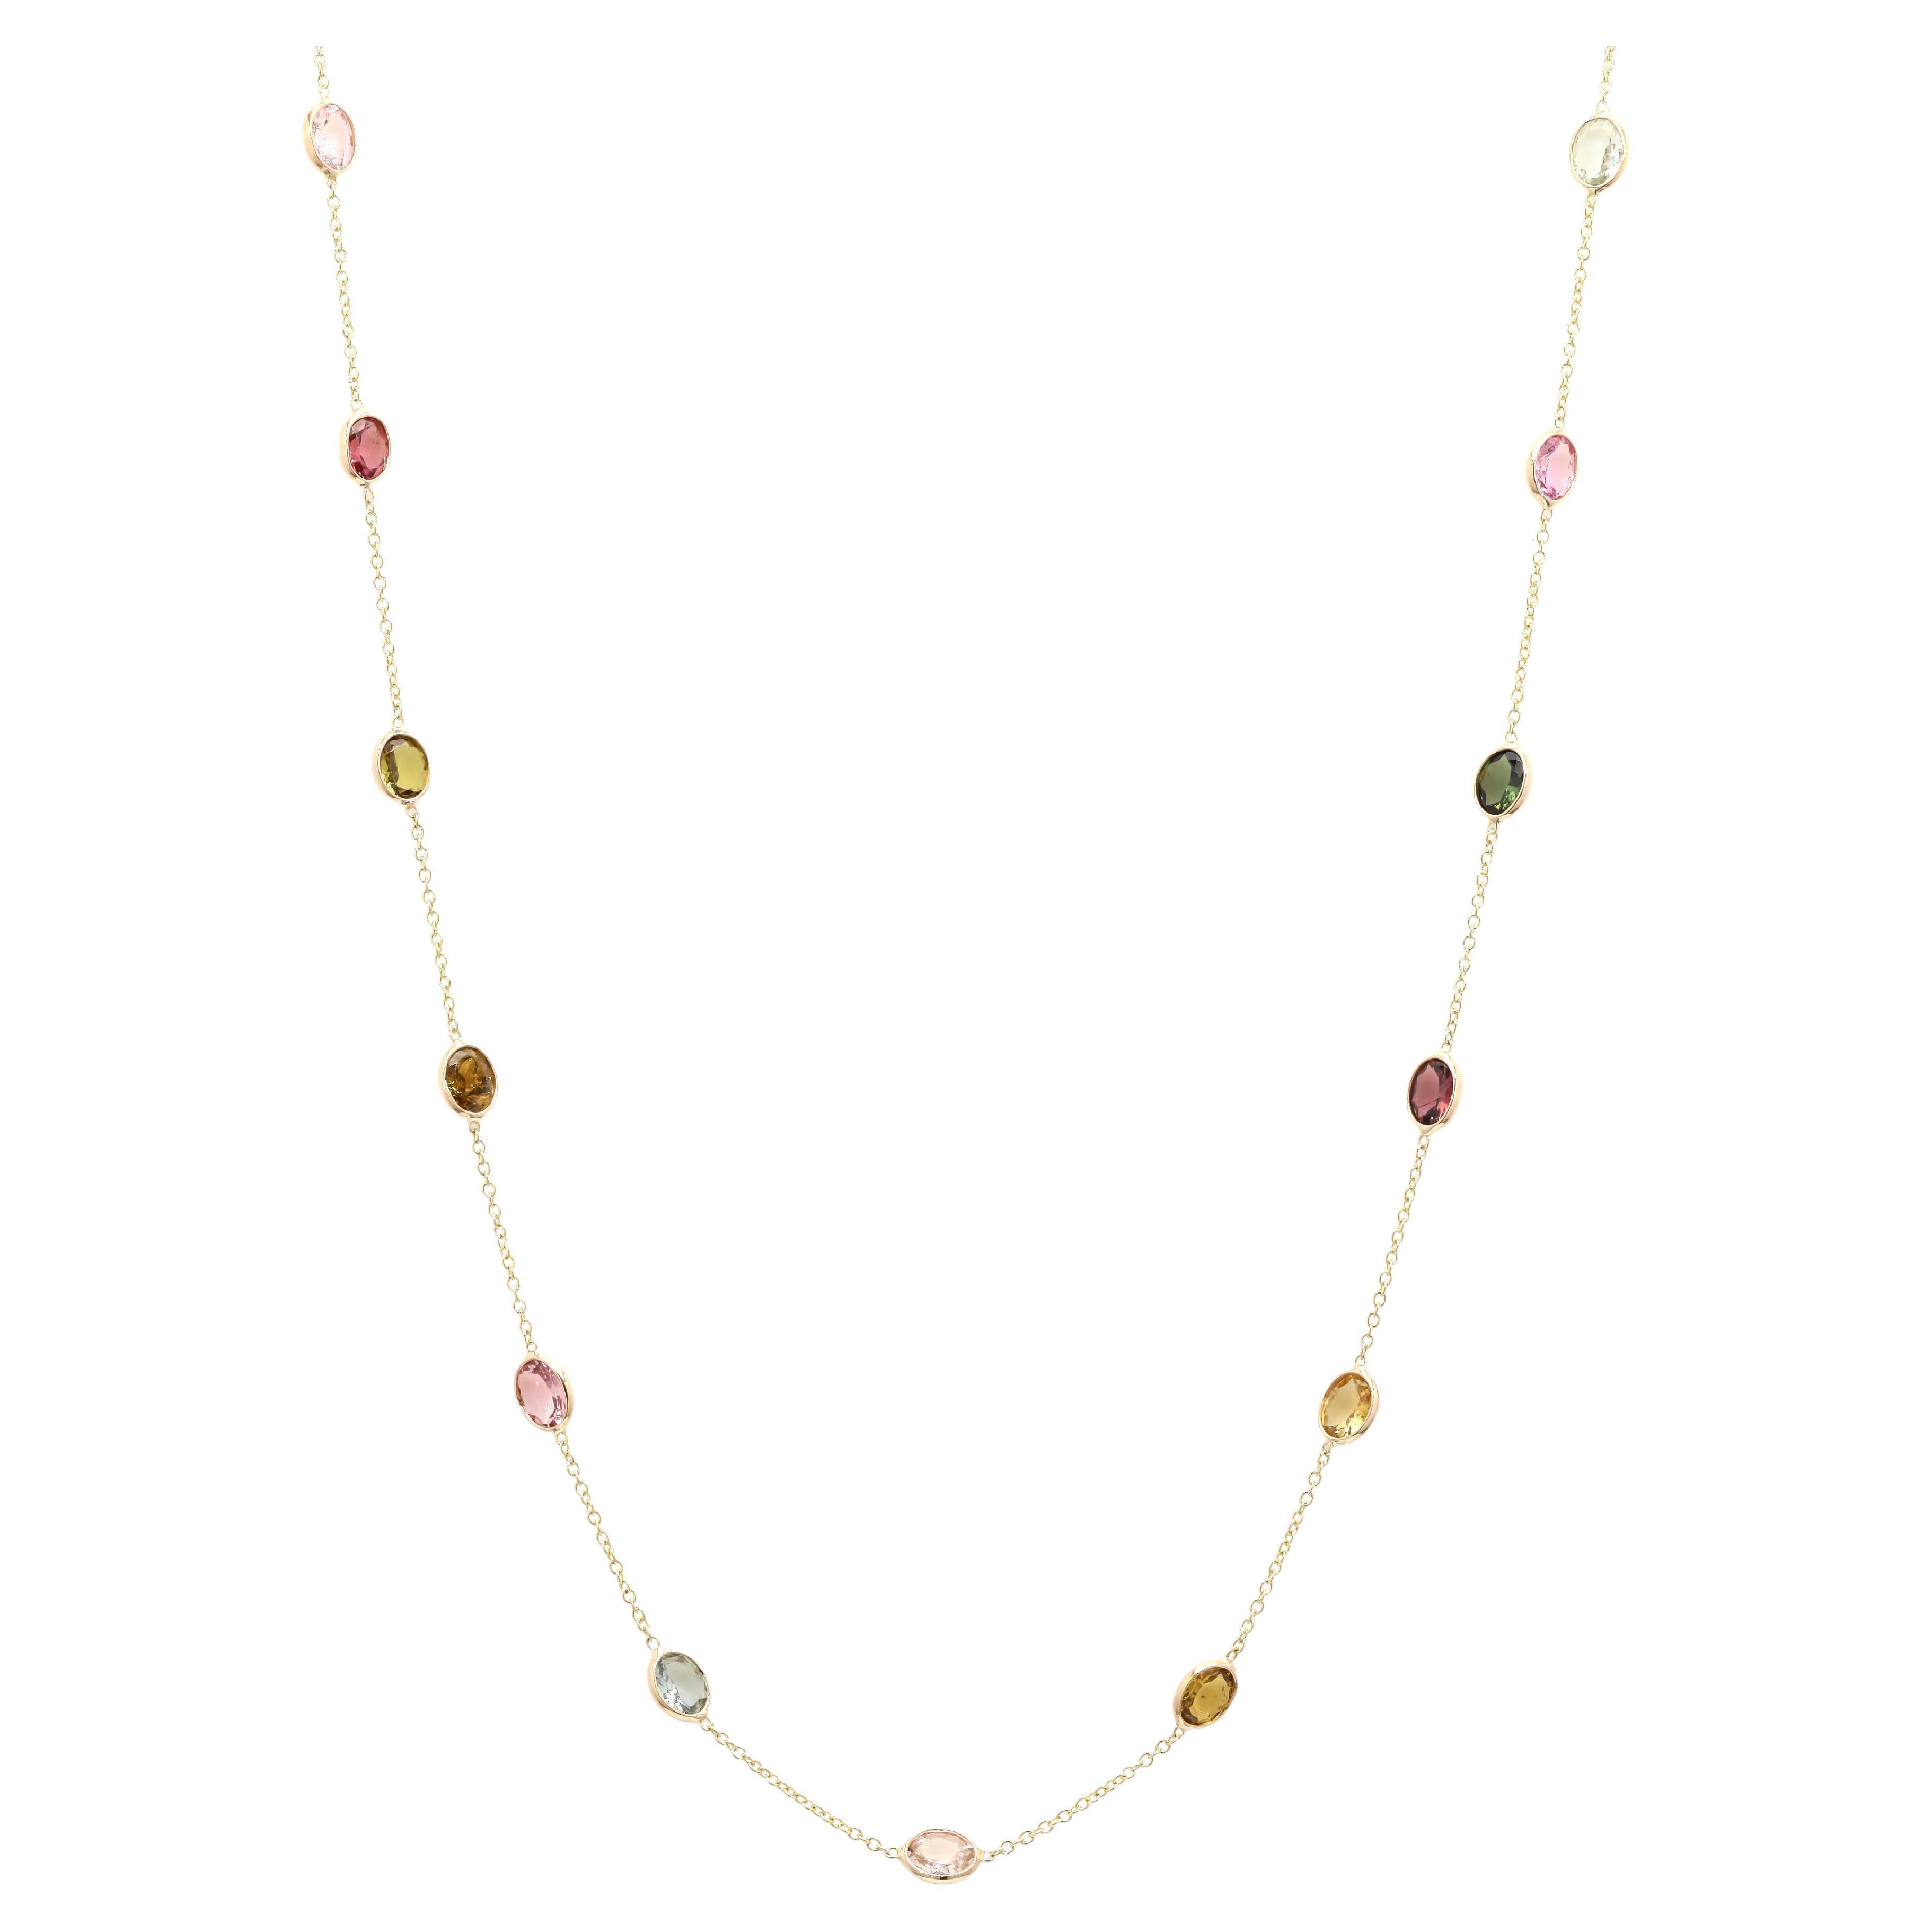 Collier de perles de tourmaline multicolore de 5,45 carats en or jaune 18 carats